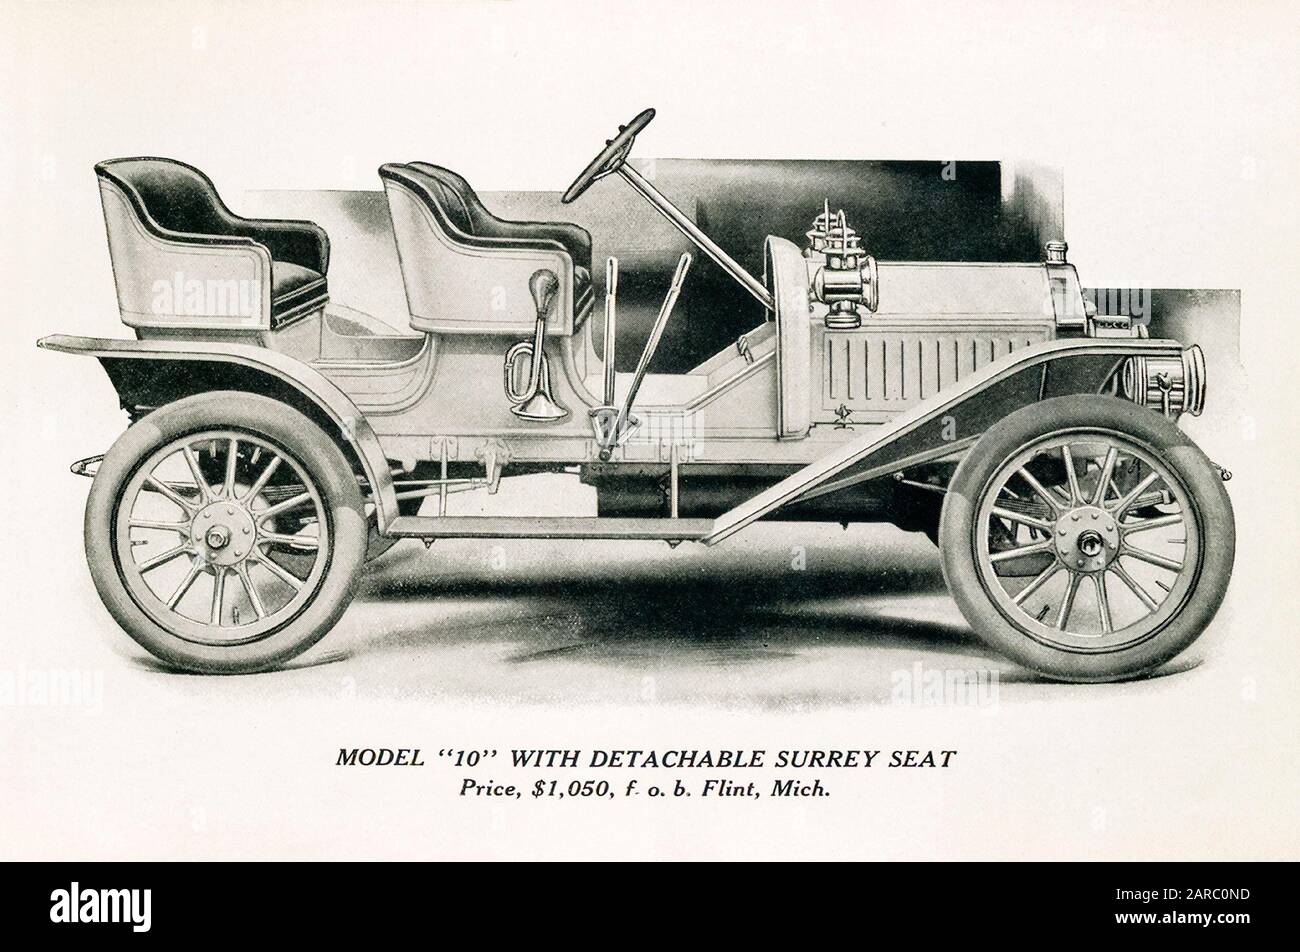 Vintage Car, Buick Model 10 with detachable Surrey seat, Price $1050, illustration, 1909 Stock Photo